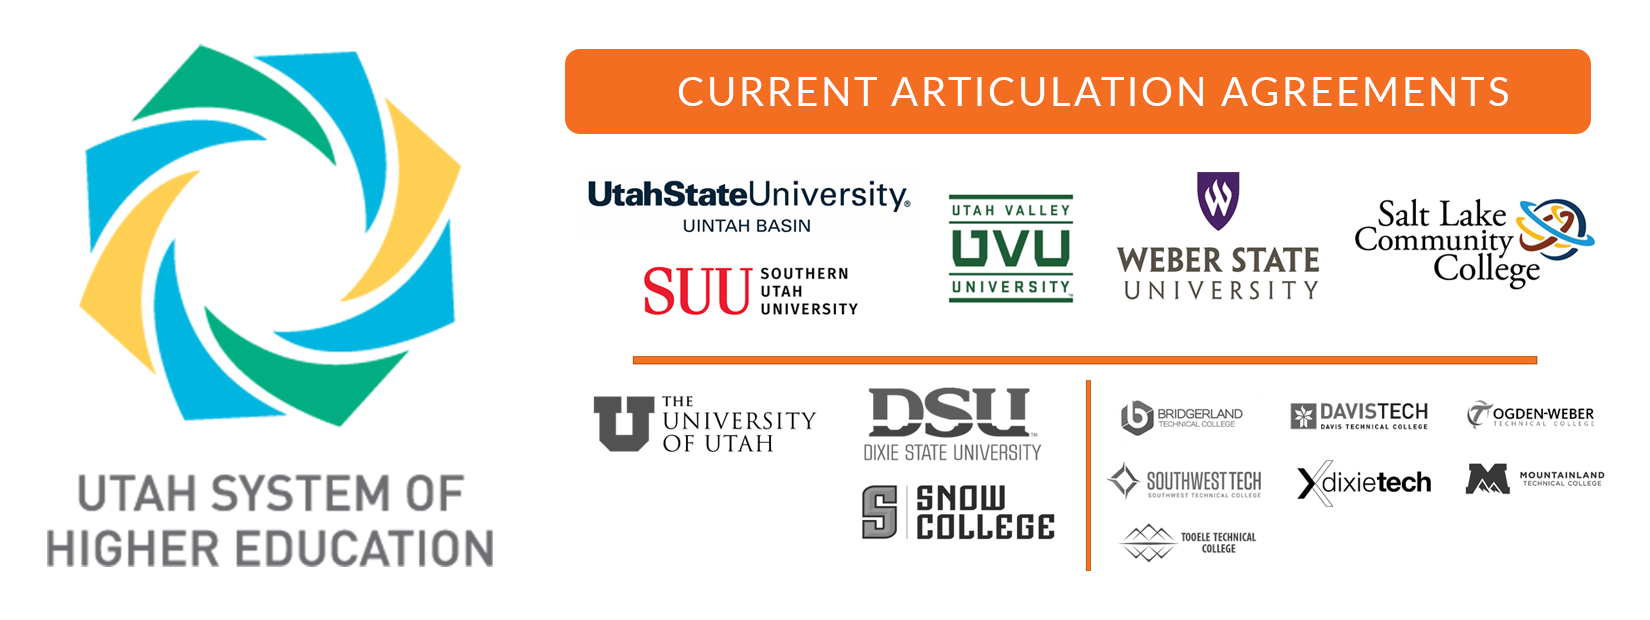 Current articulation agreements: Utah State Uintah Basin, Utah Valley University, Weber State, Salt Lake Community College, Southern Utah University